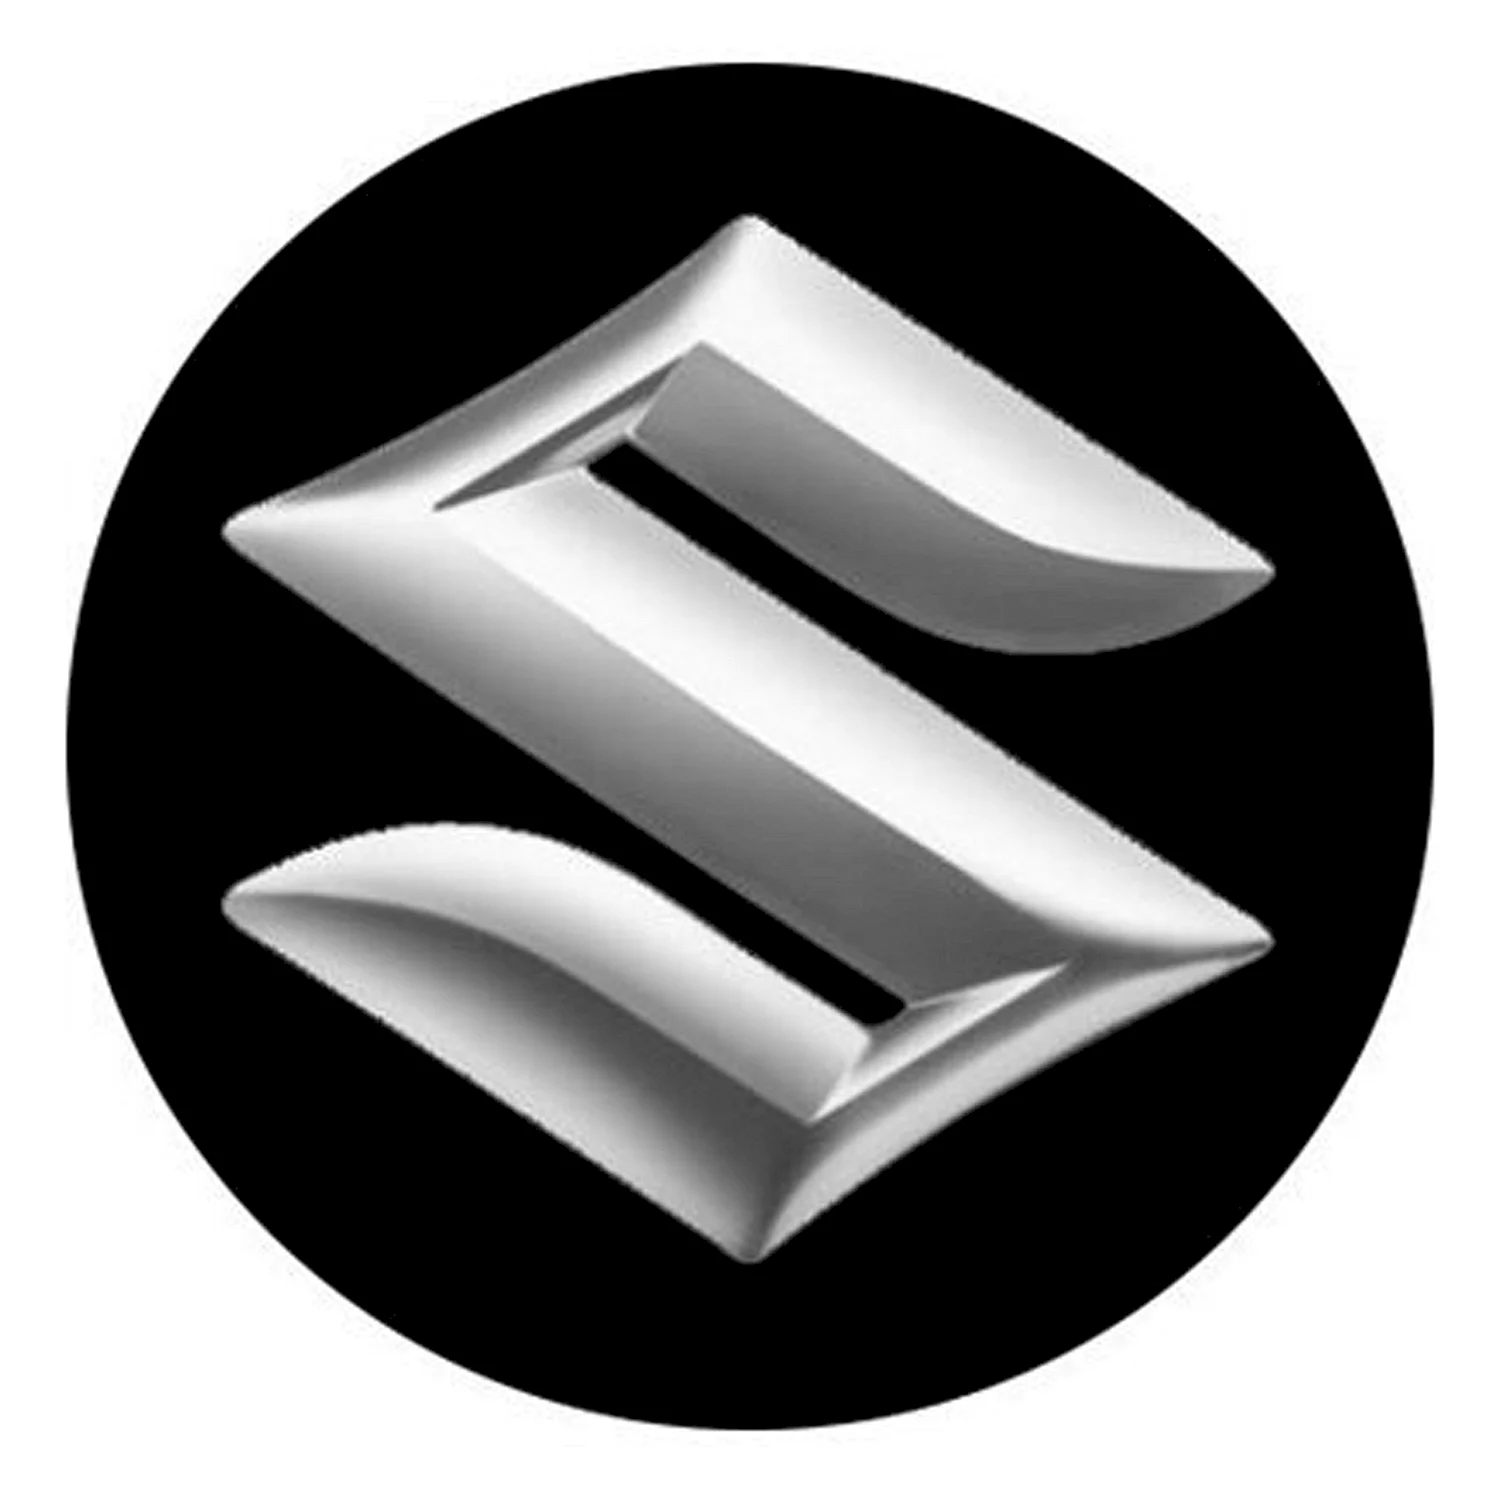 Suzuki лого